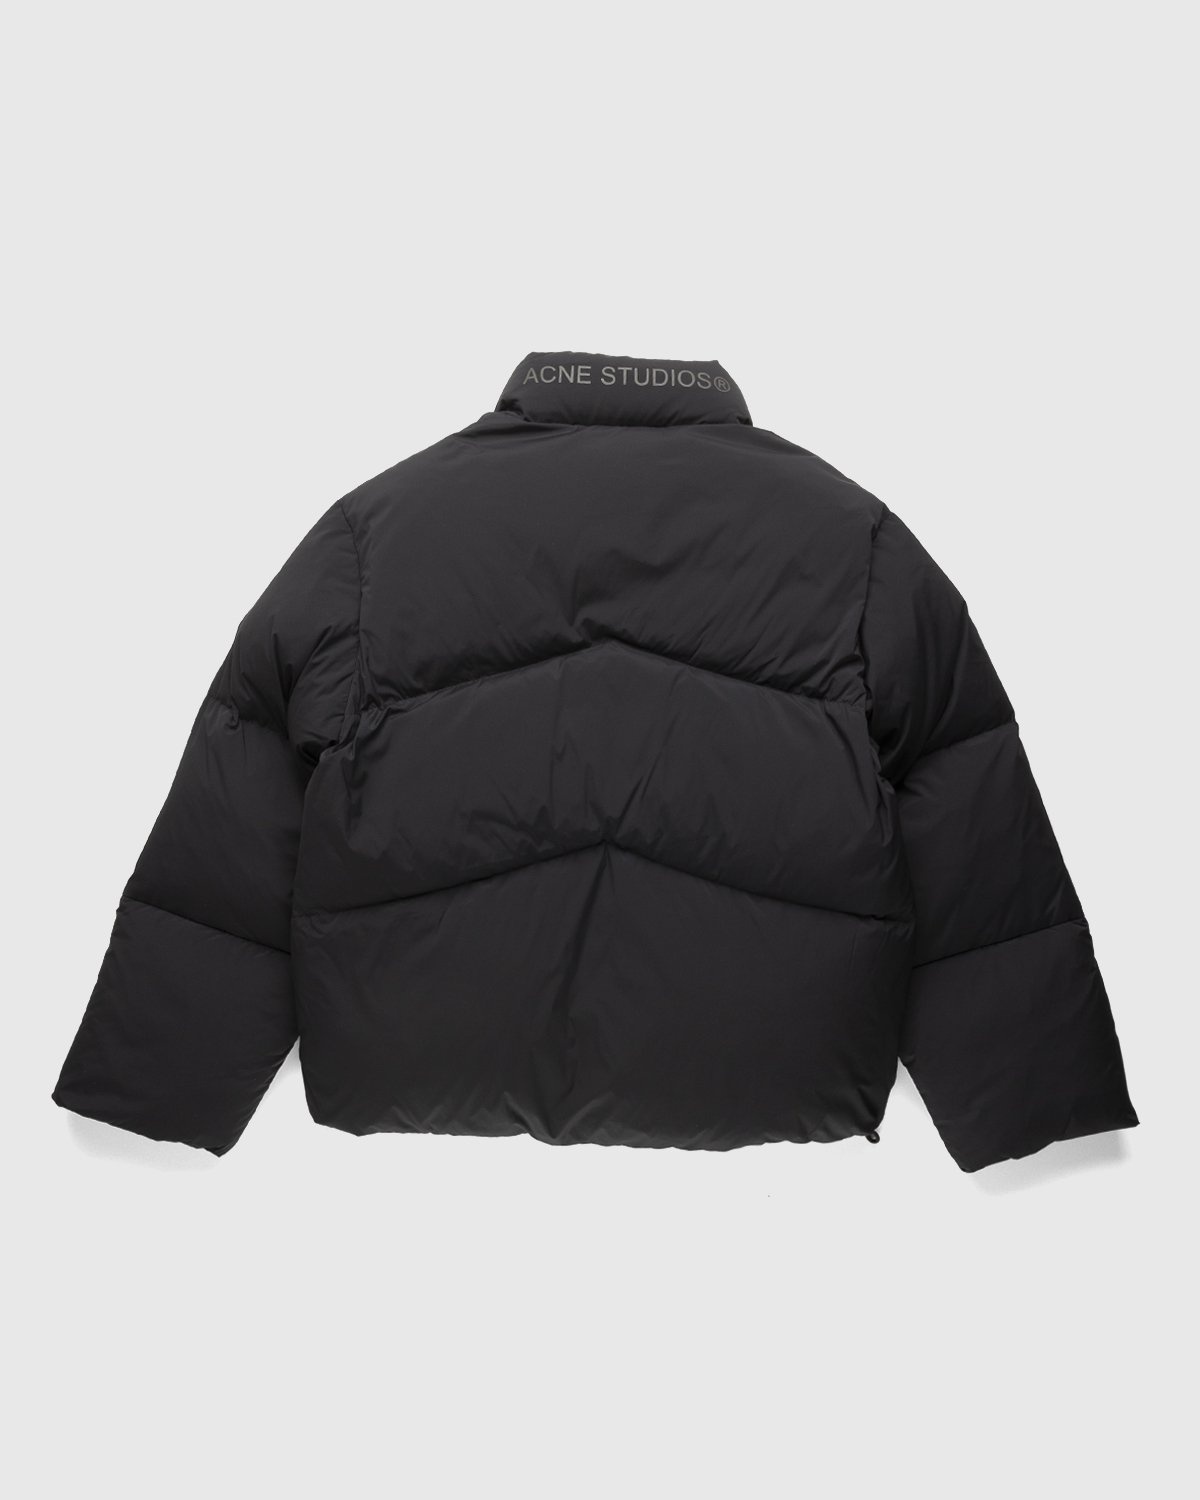 Acne Studios – Puffer Jacket Black - Outerwear - Black - Image 2